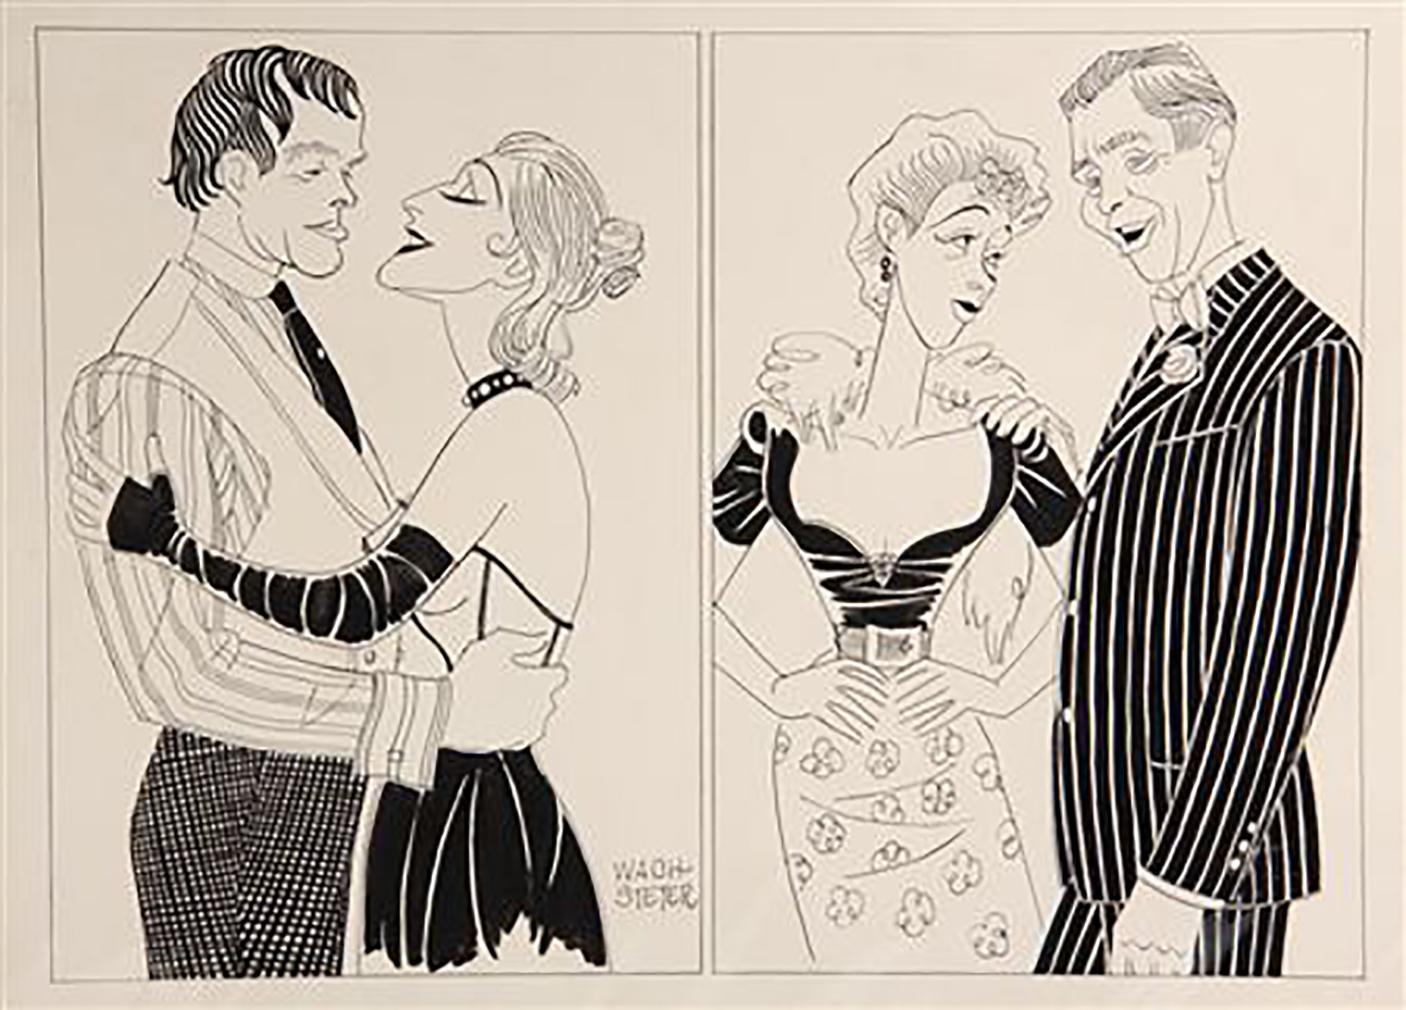 Figurative Art George Wachsteter - Double ensemble de caricatures pour "Three Penny Opera" et "The Iceman Cometh"